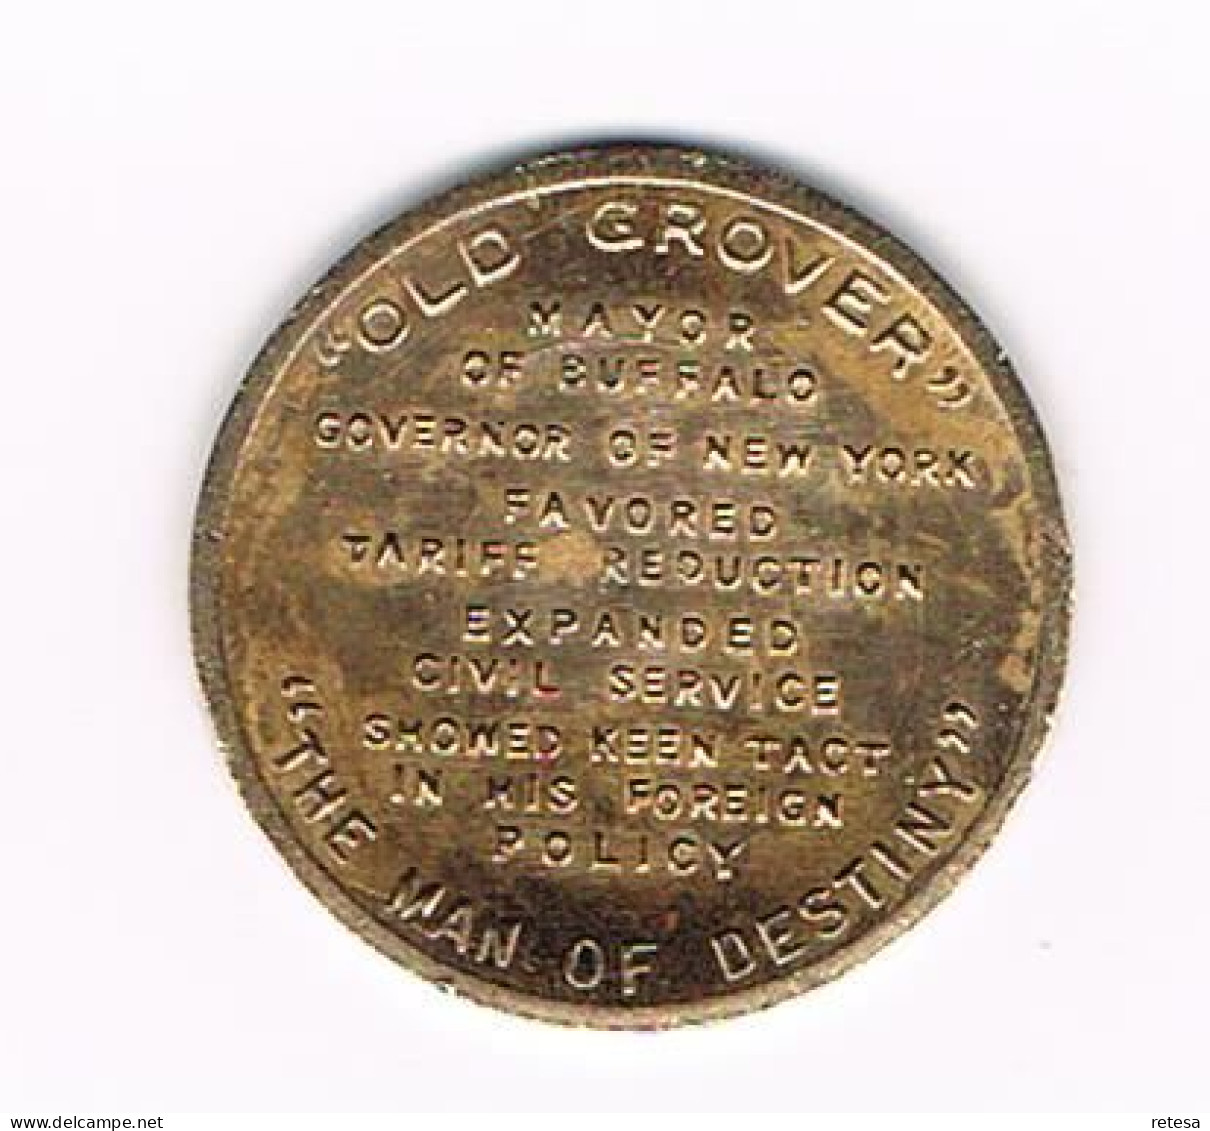 # PENNING  GROVER CLEVELAND 24 TH  PRESIDENT  U.S.A. - Monete Allungate (penny Souvenirs)